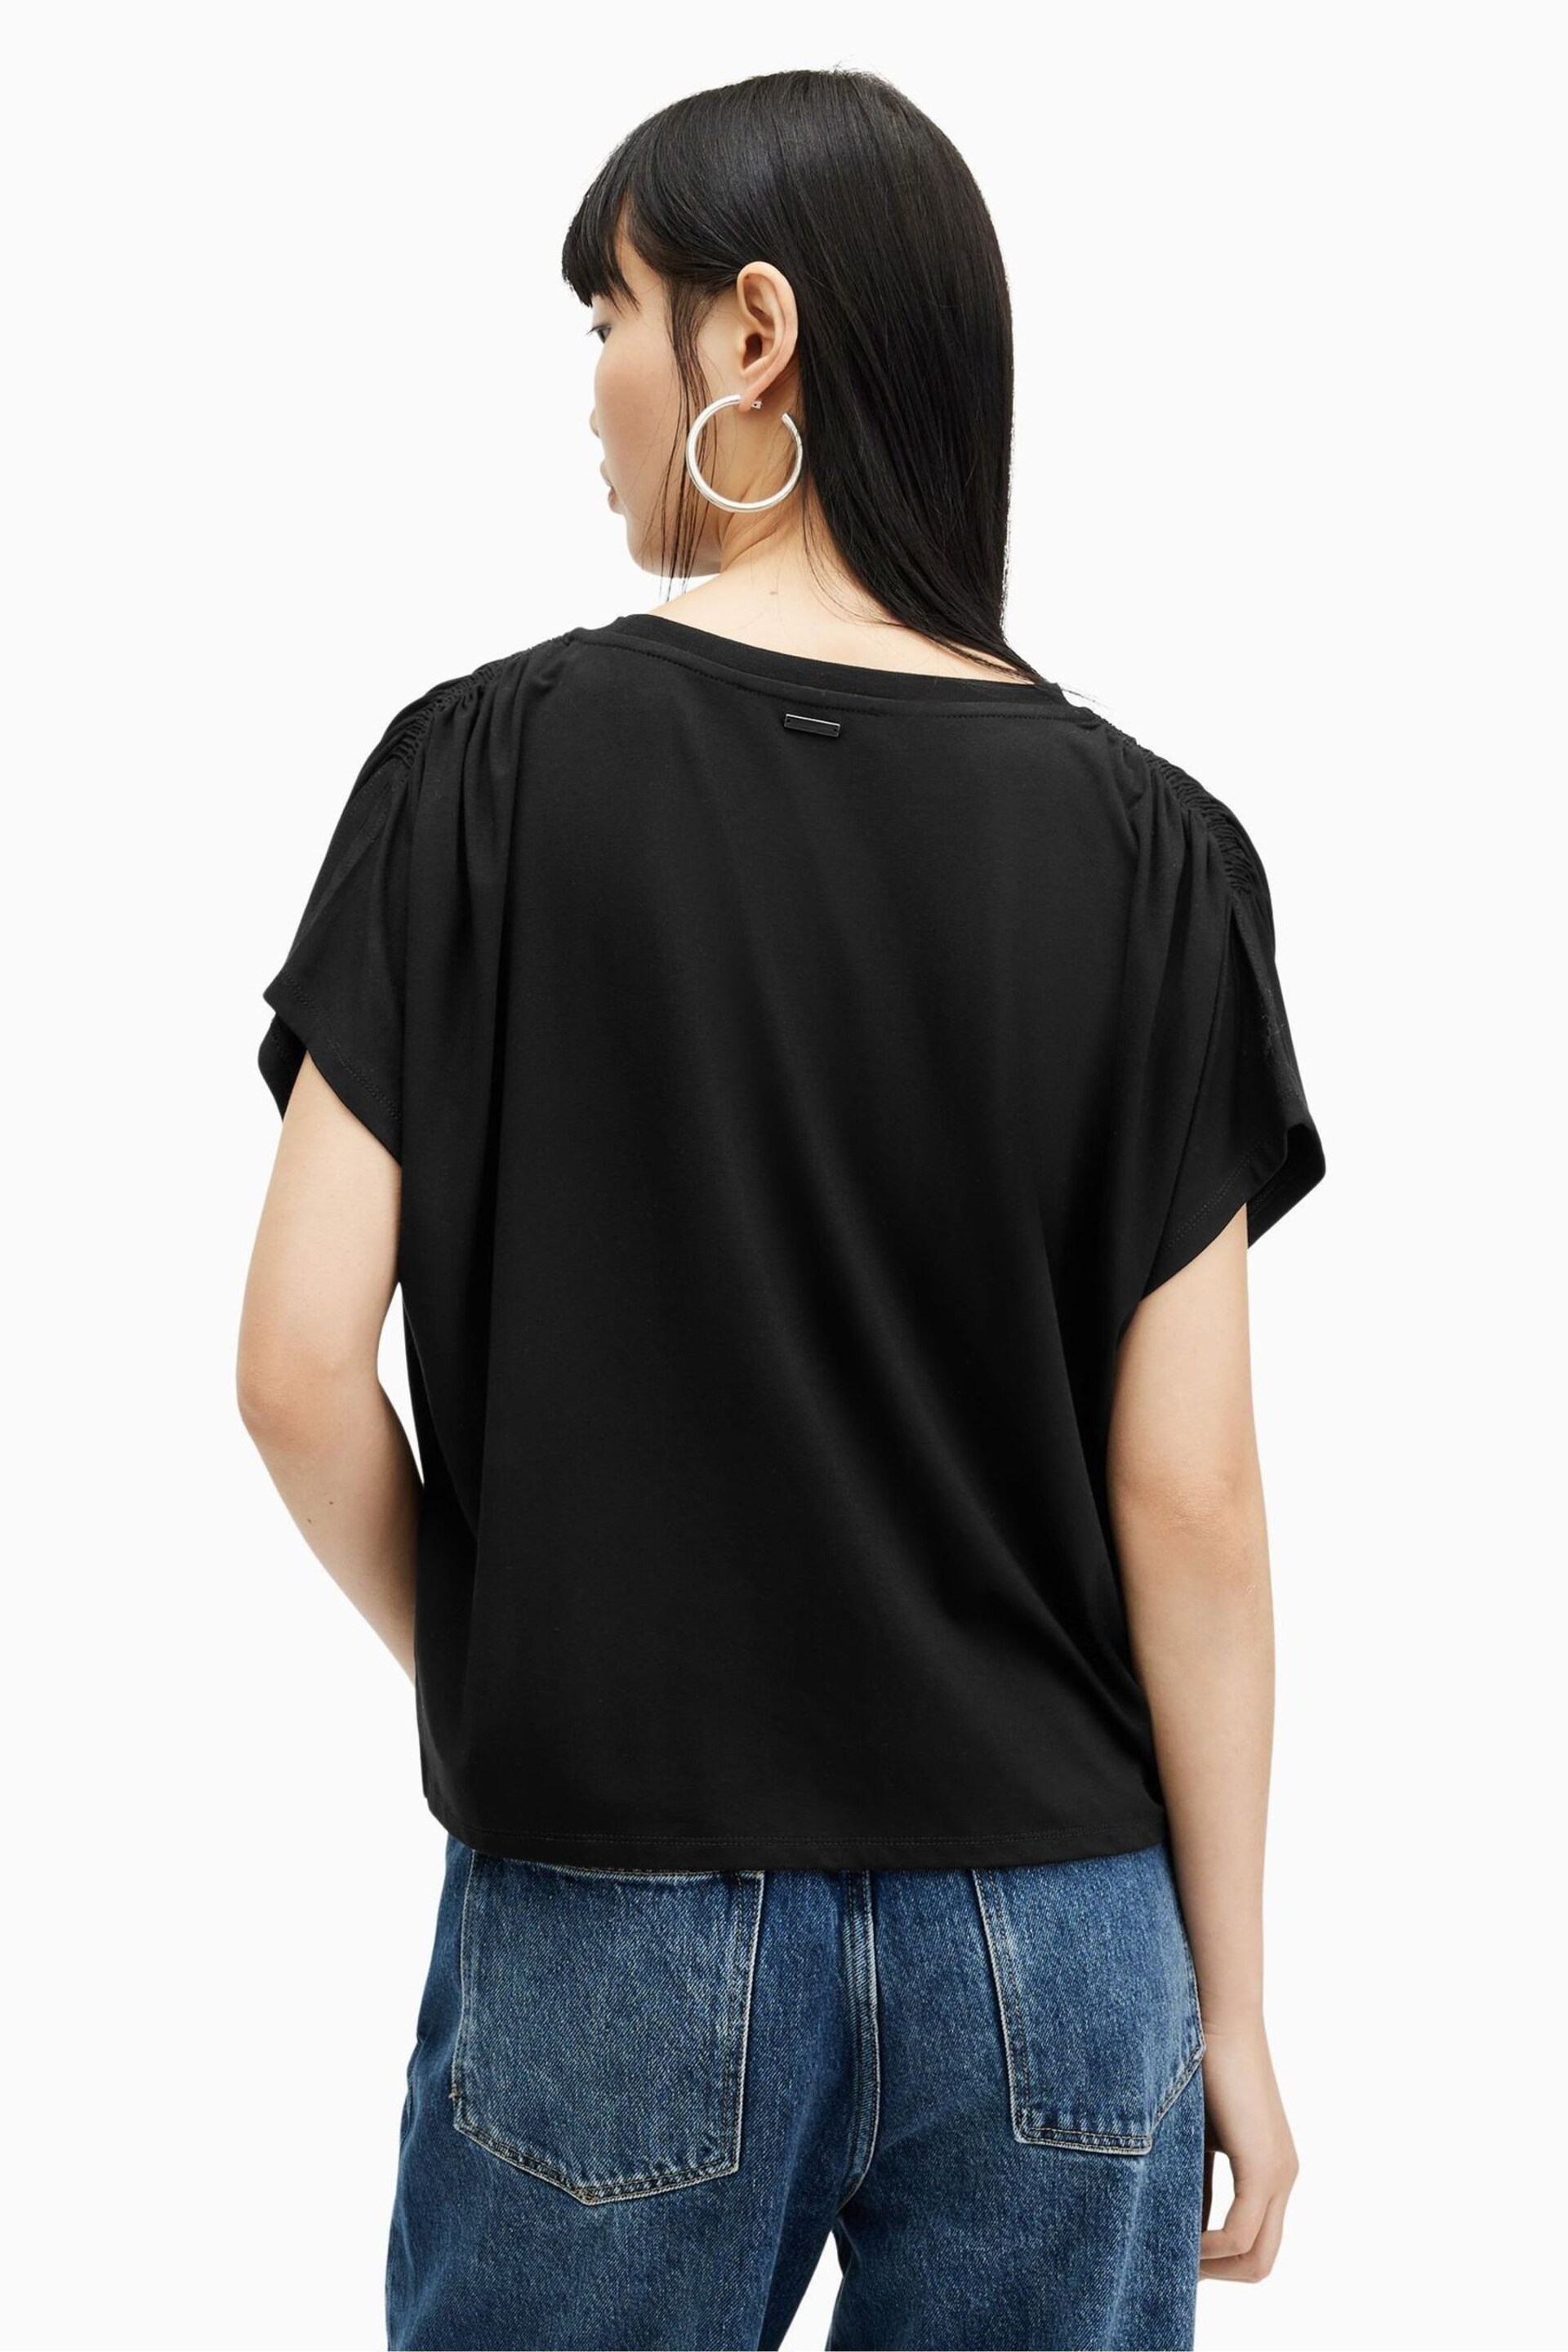 AllSaints Black Natalie T-Shirt - Image 2 of 7